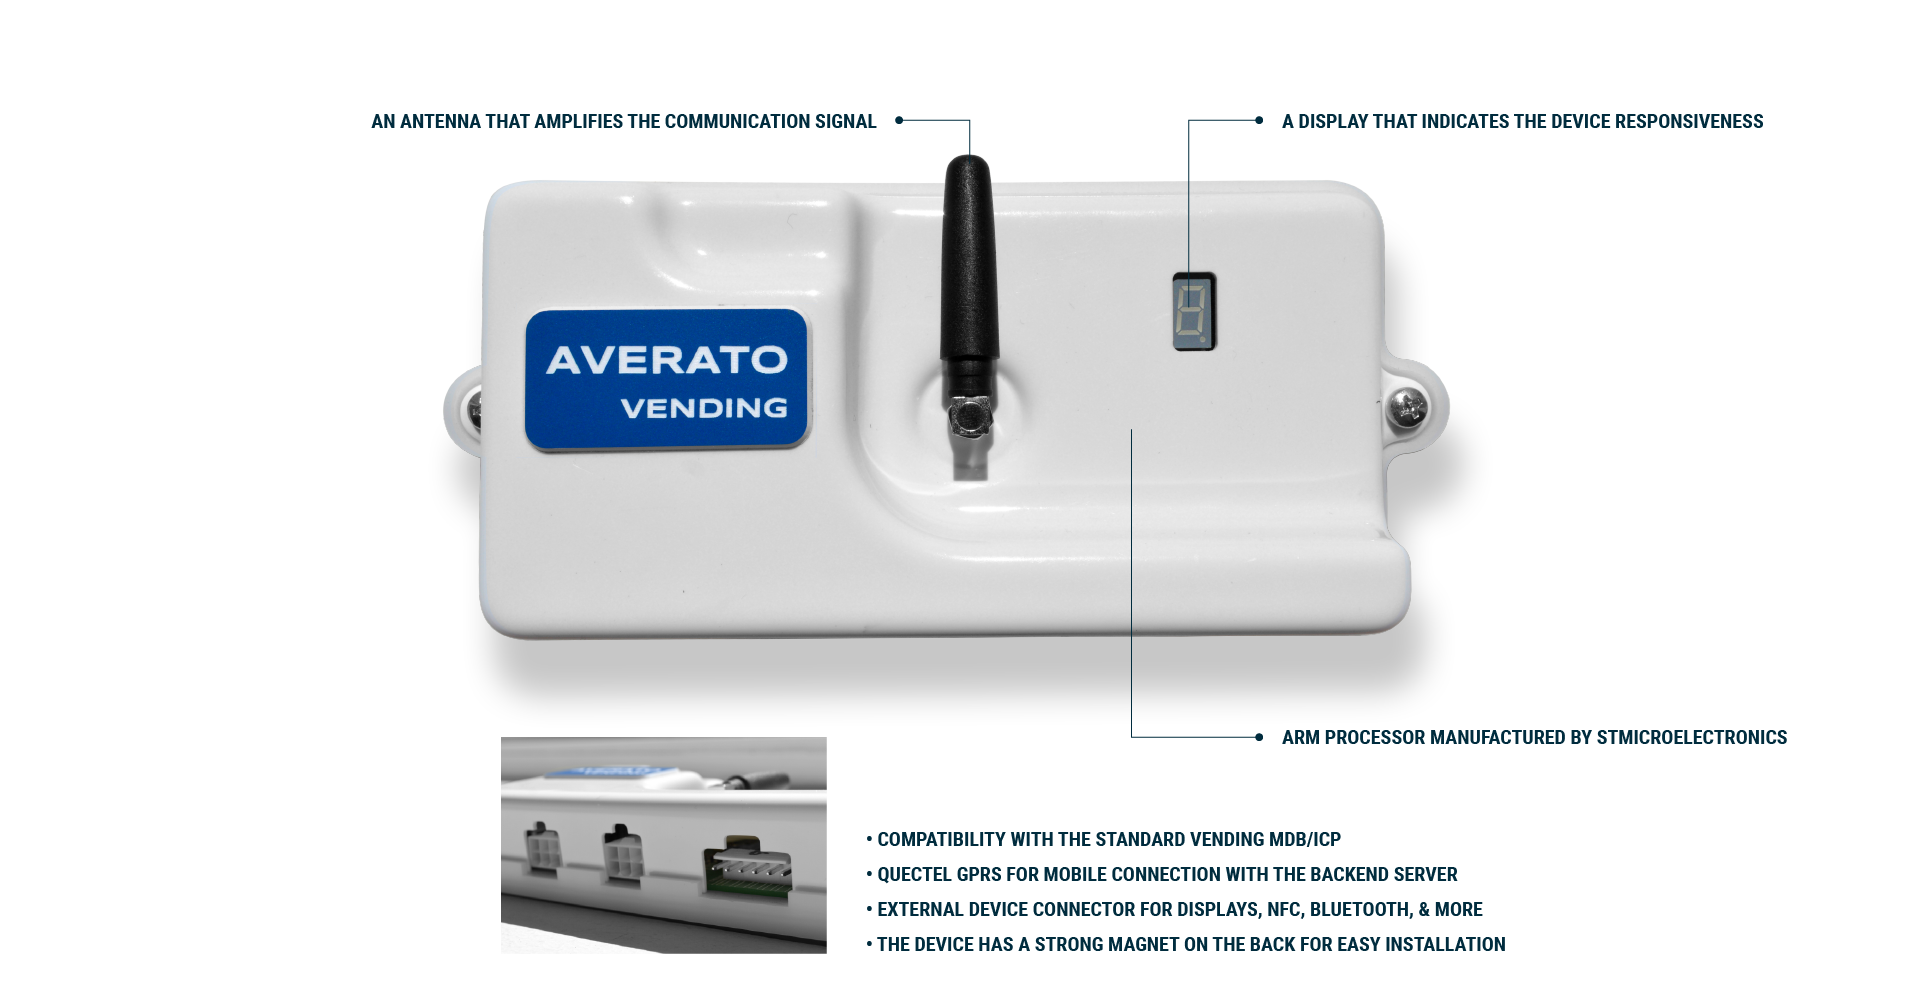 AVERATO device and its specs